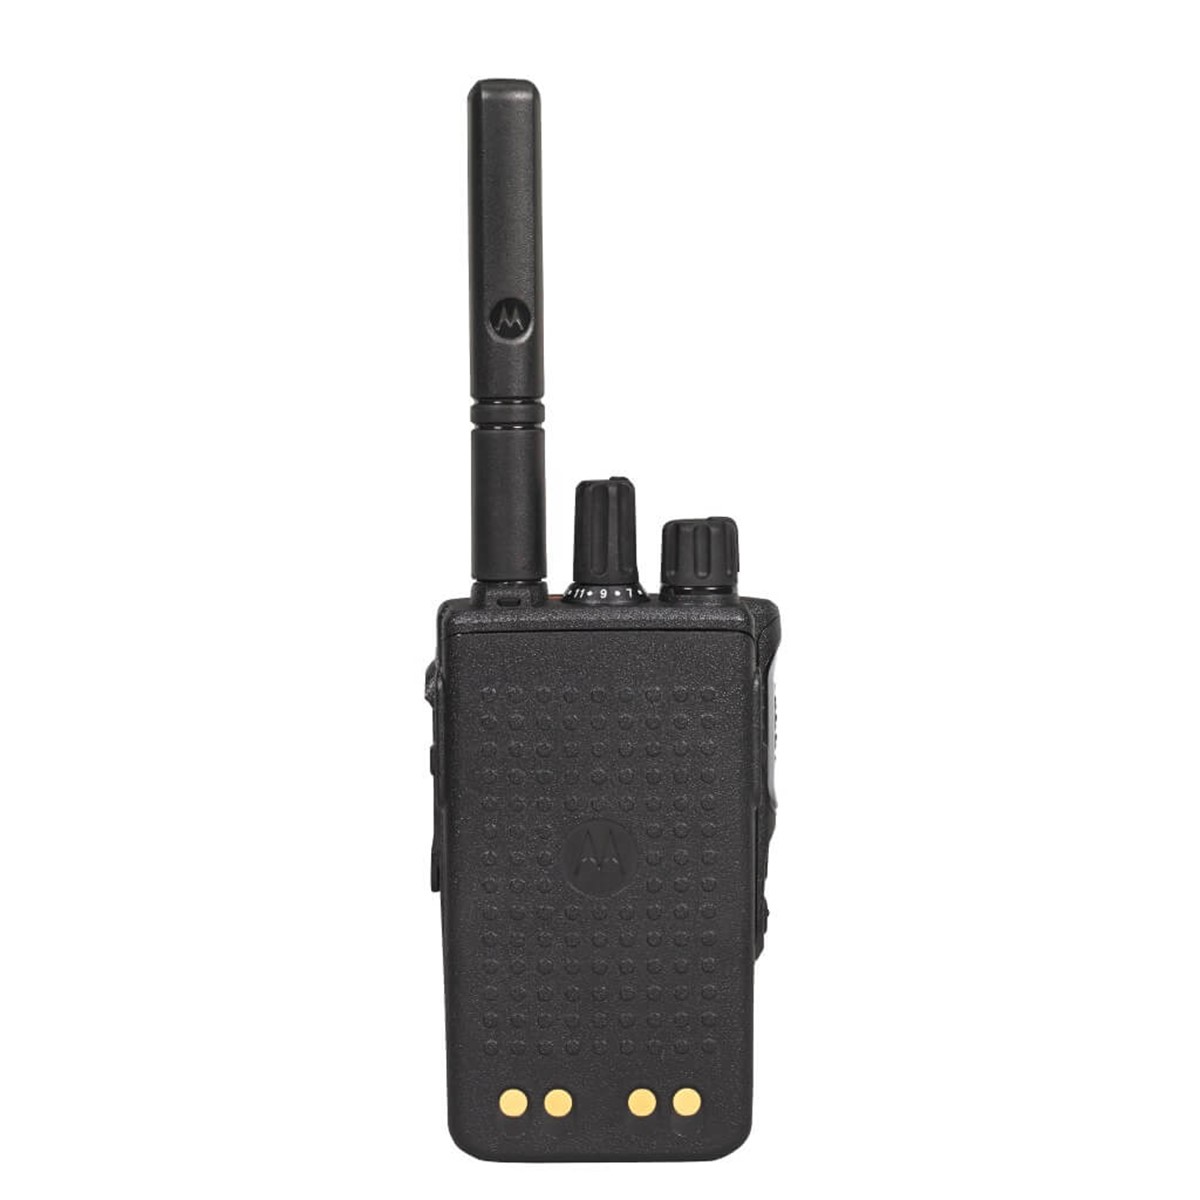 Radio Motorola DGP8050e Elite Digital LAH69JDC9RA1AN VHF 136-174 MHz